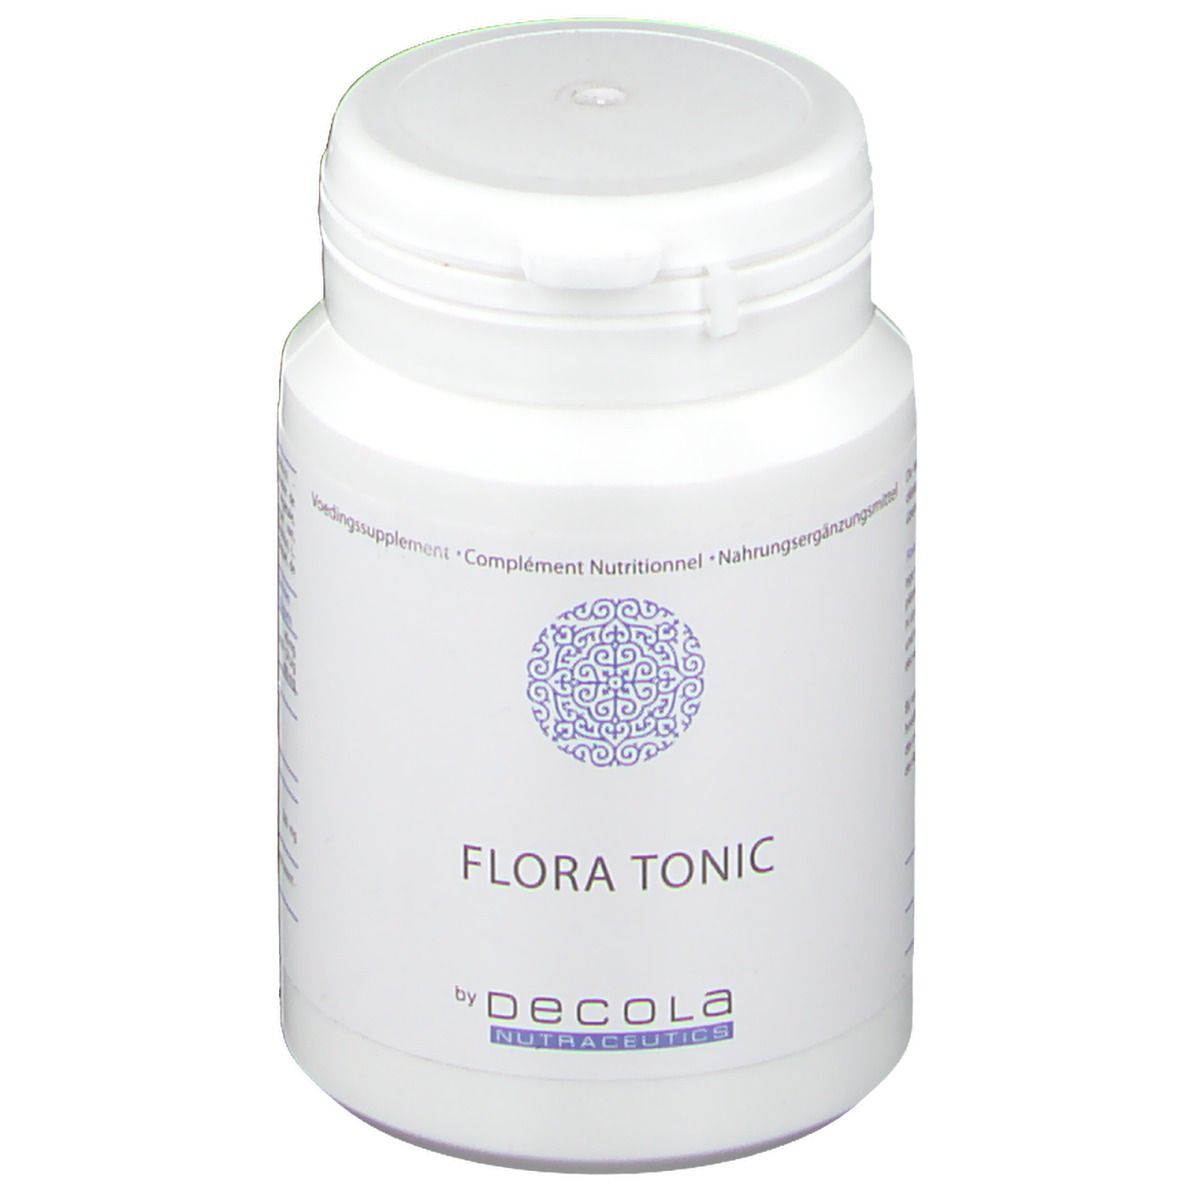 Image of Decola Flora Tonic